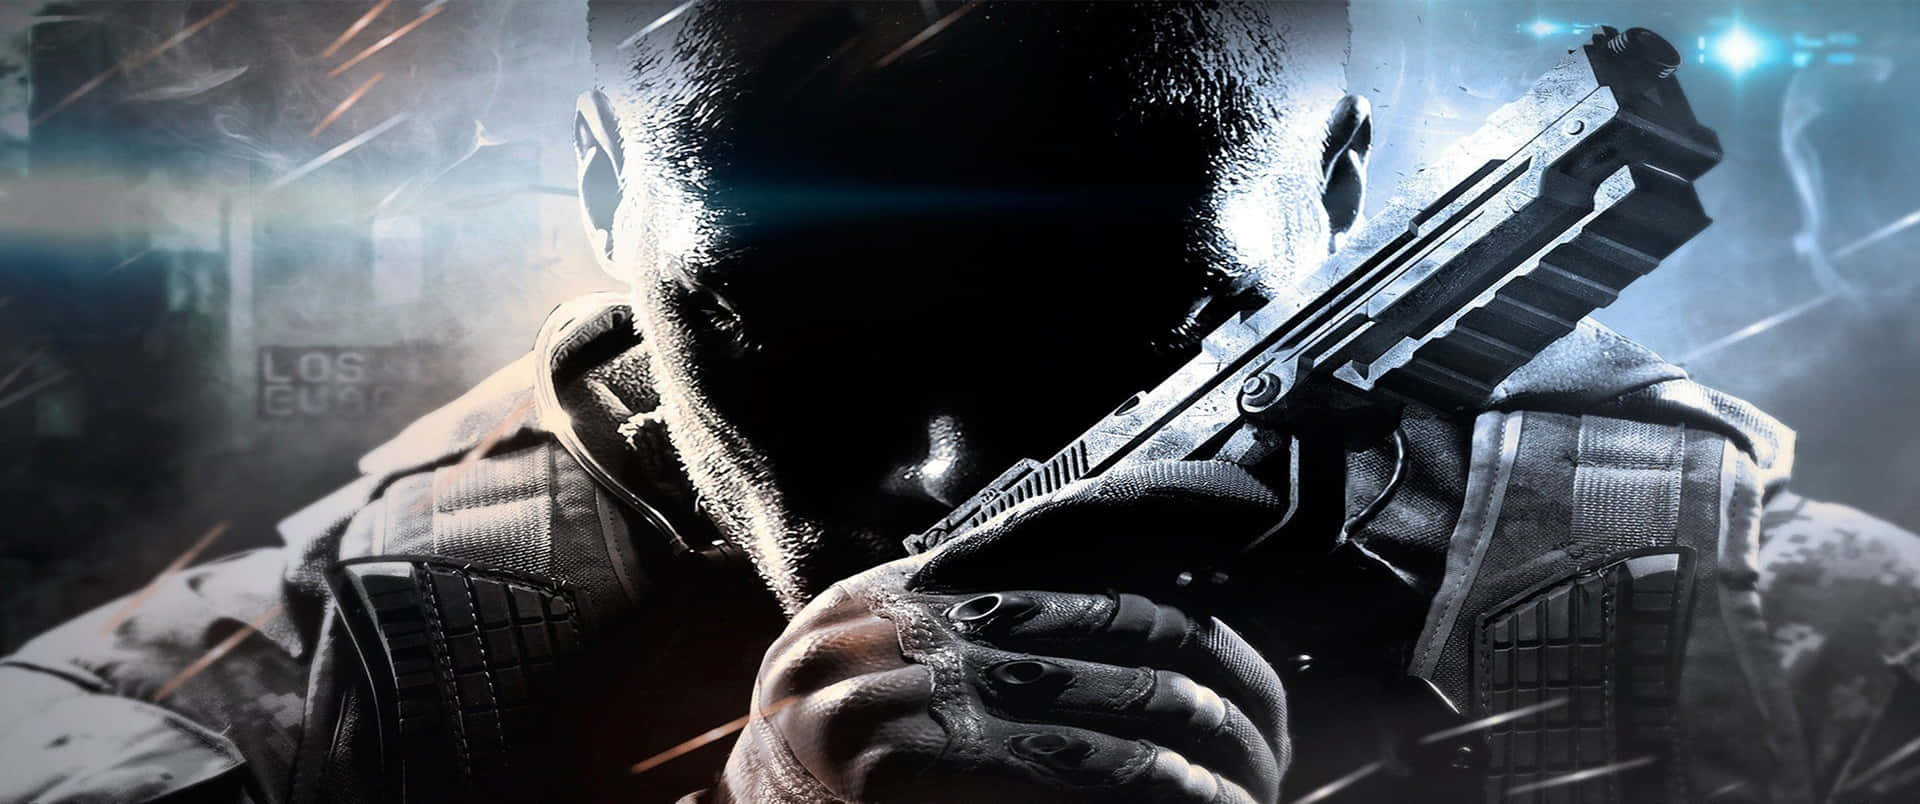 Prontoper L'azione: Gioca A Call Of Duty Black Ops Cold War In 3440x1440p